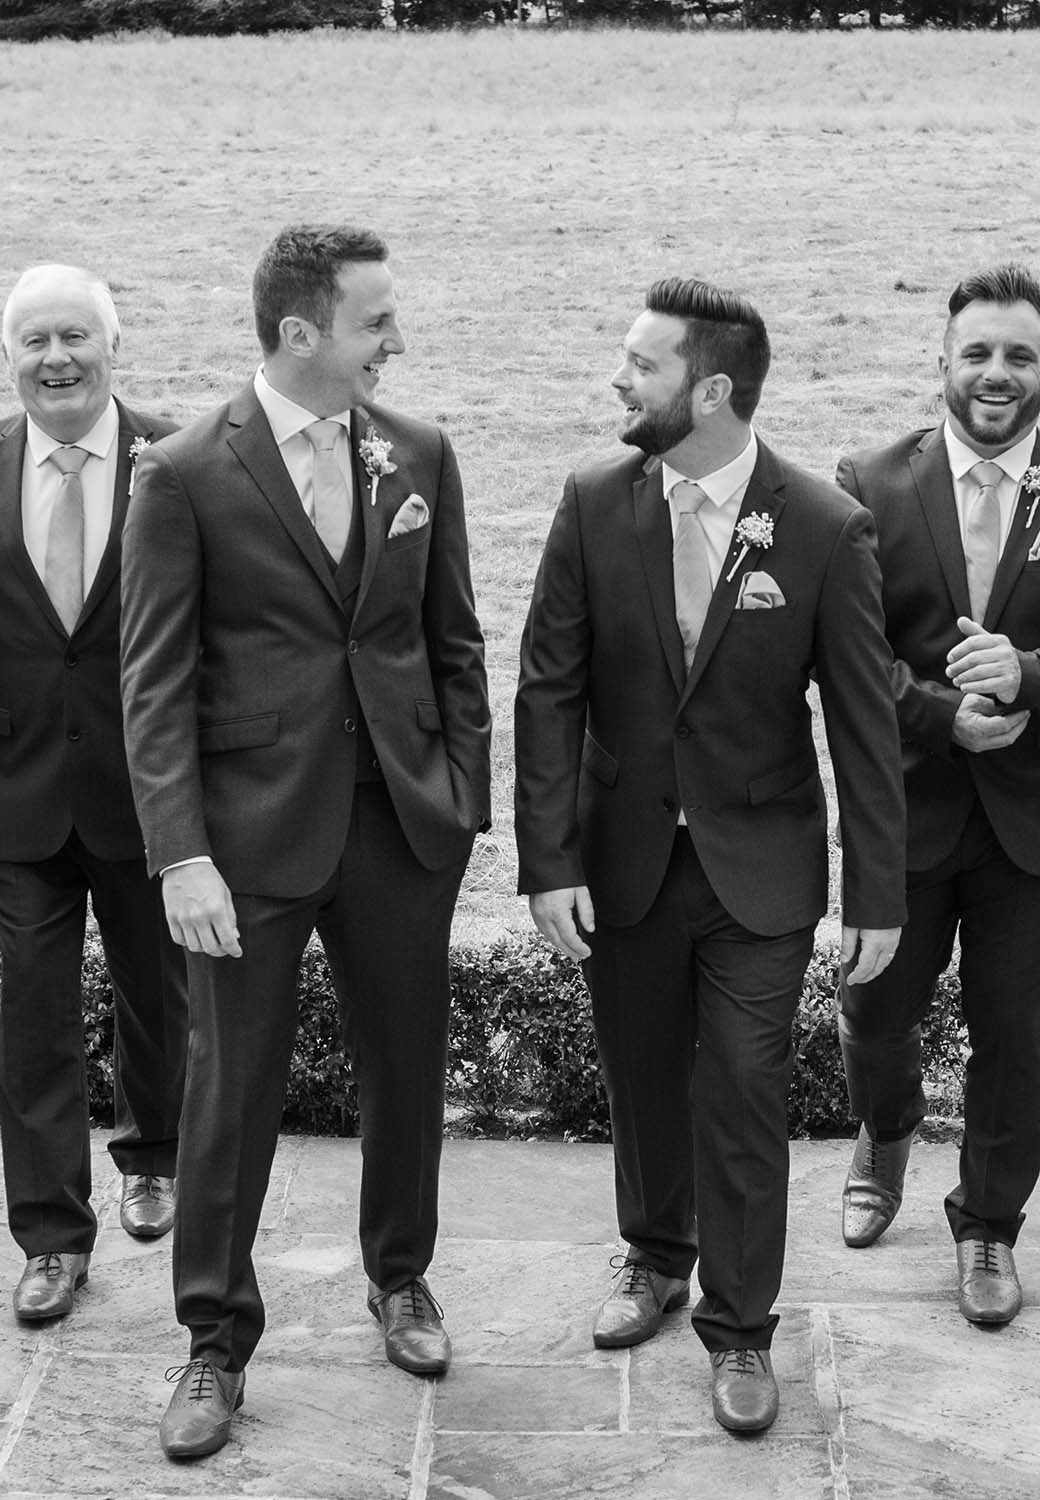 Brockencote Hall Hotel wedding groom and friends